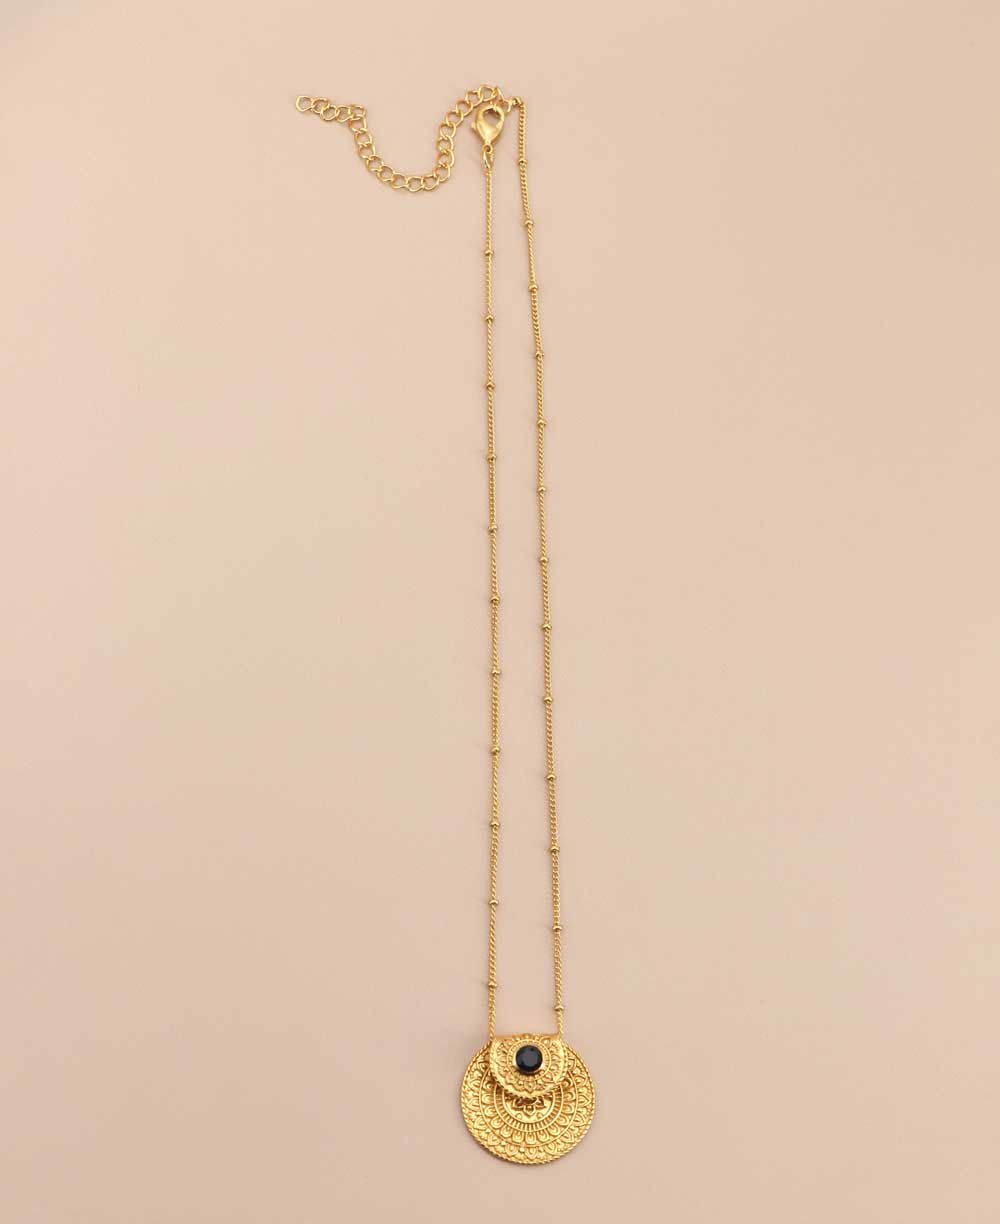 Inspirational Gold Plated Mandala Necklace with Black Onyx Stone - Necklaces